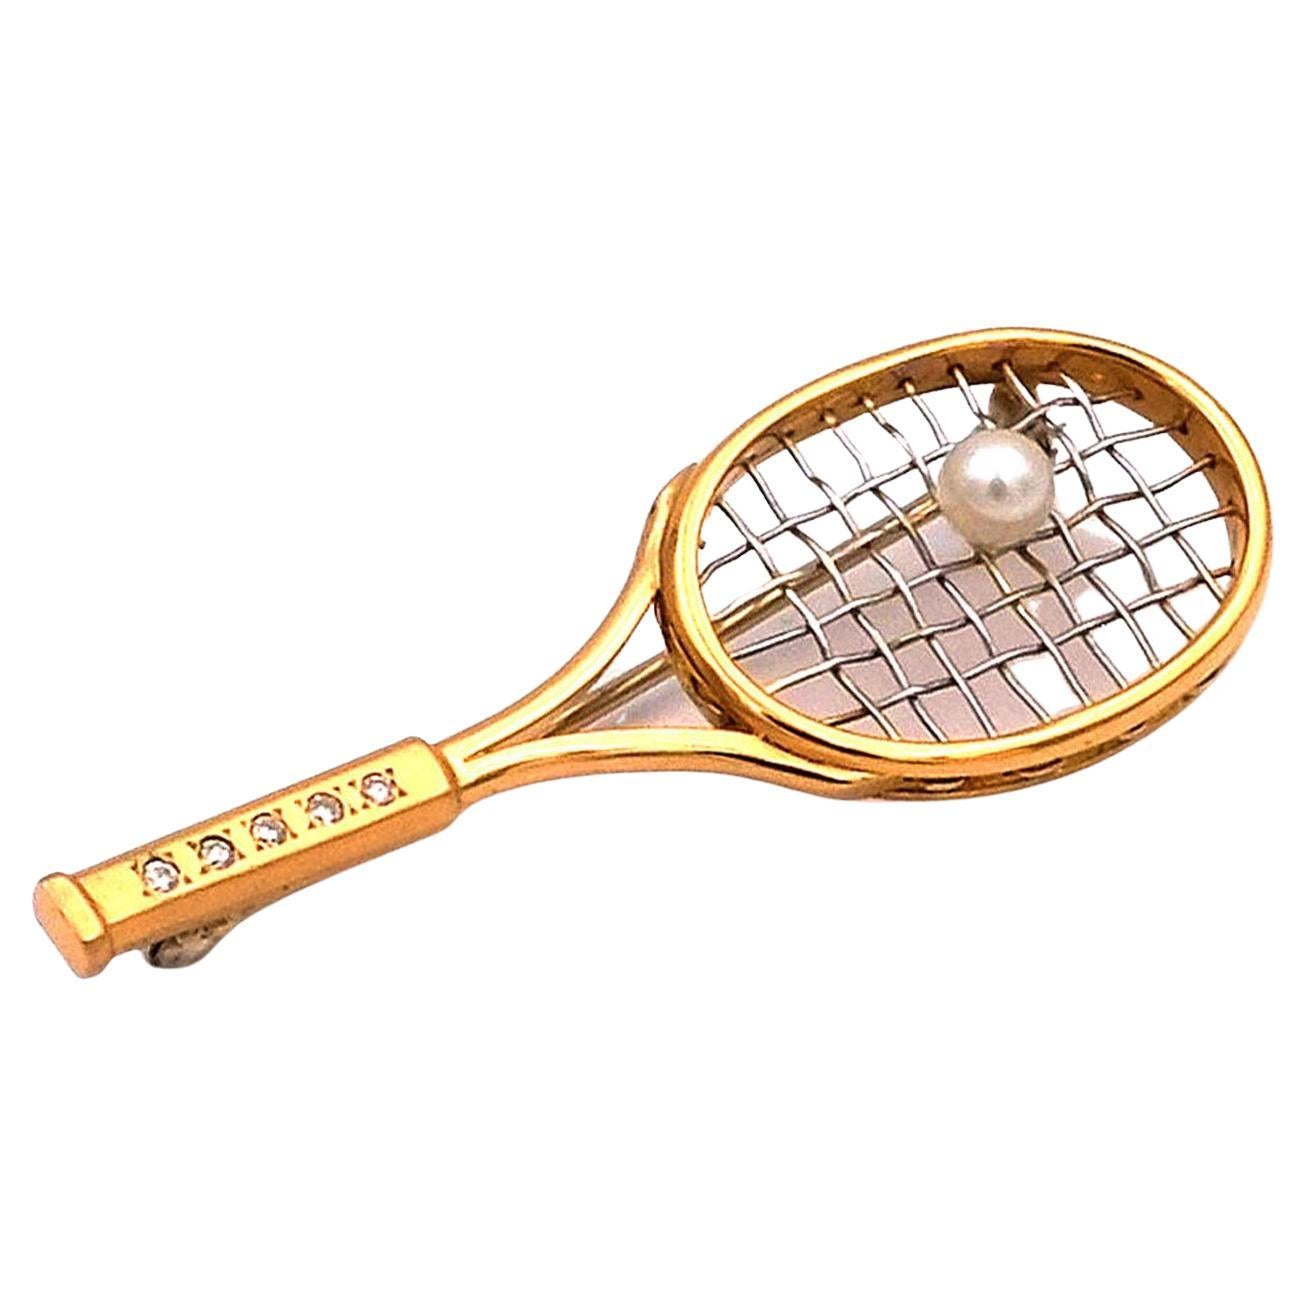 Vintage Pearl Diamond 18k Gold and Platinum Tennis Racket Brooch